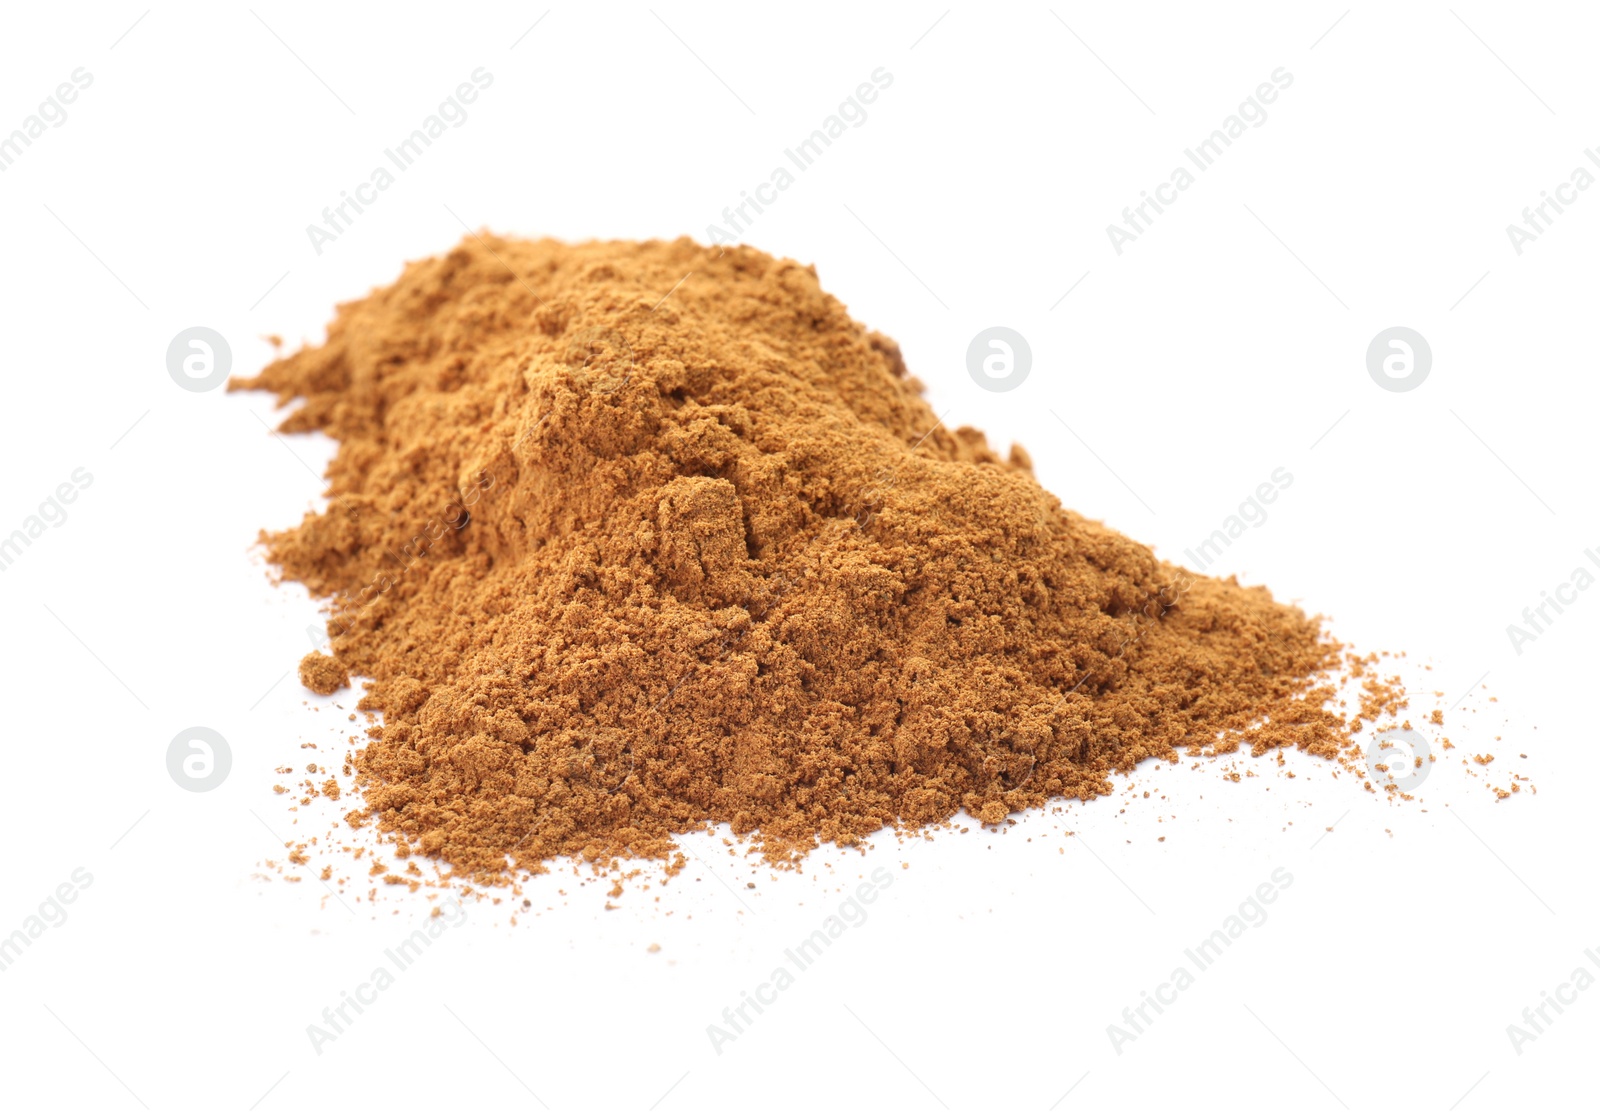 Photo of Aromatic cinnamon powder on white background